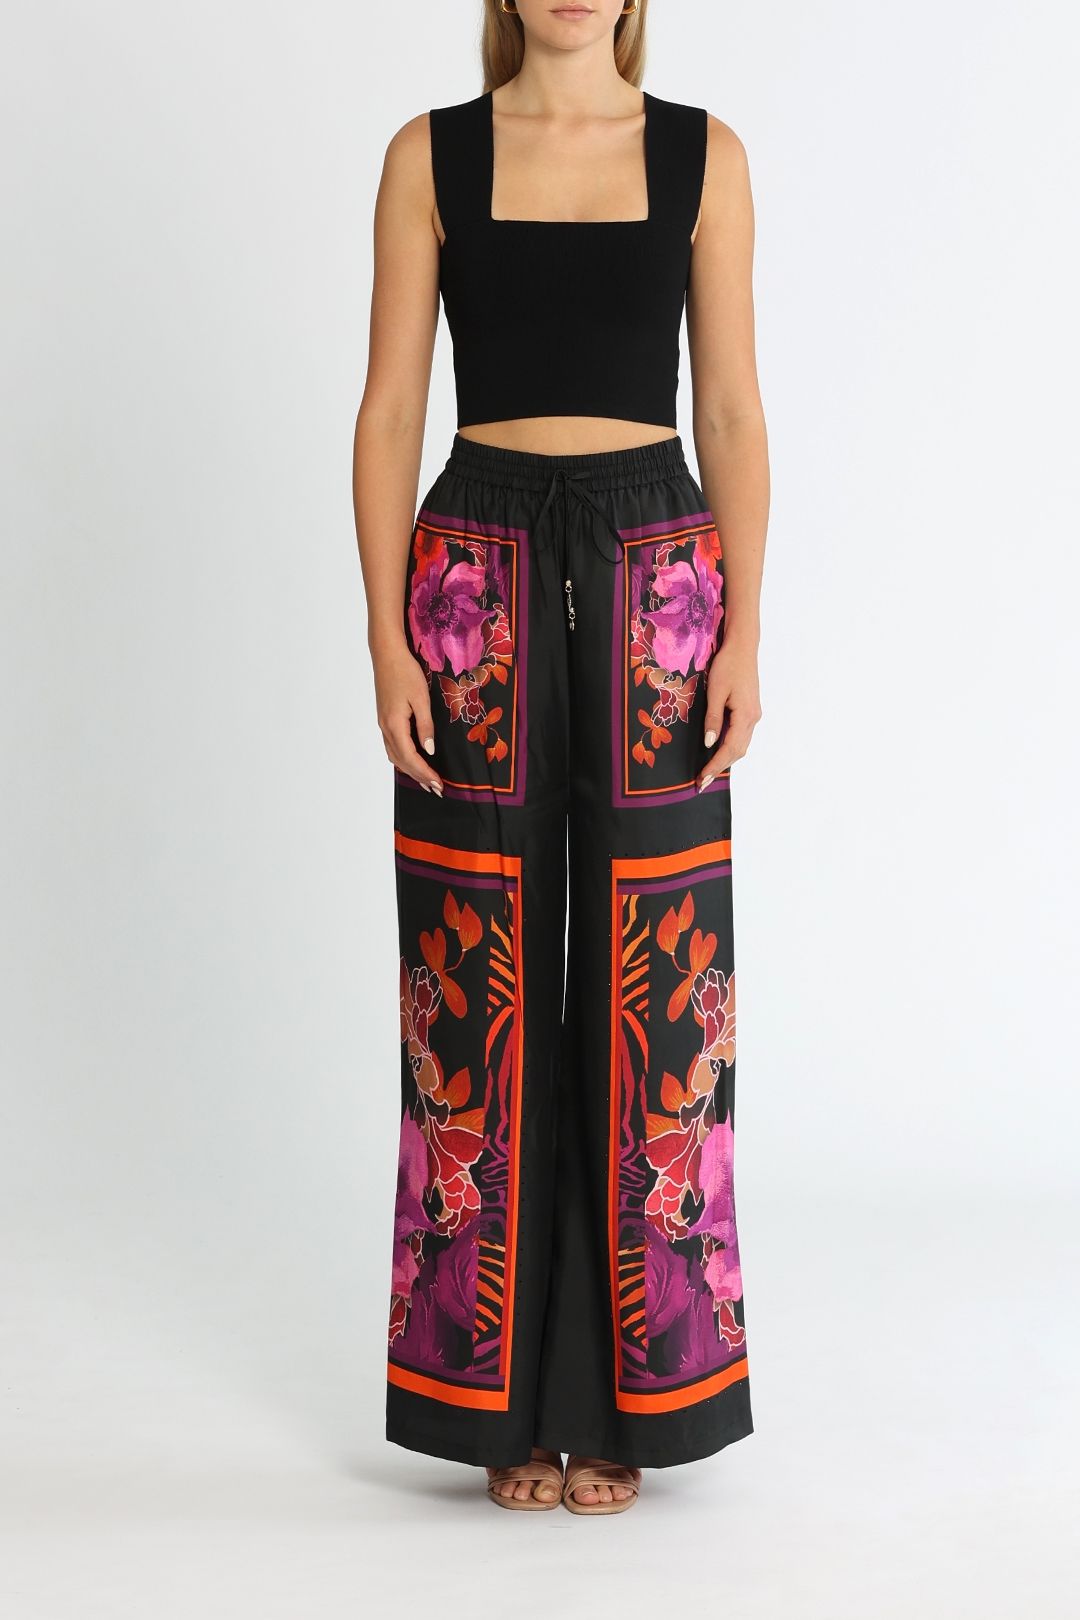 Camilla Dresses | Shop Designer Camilla Clothing Online